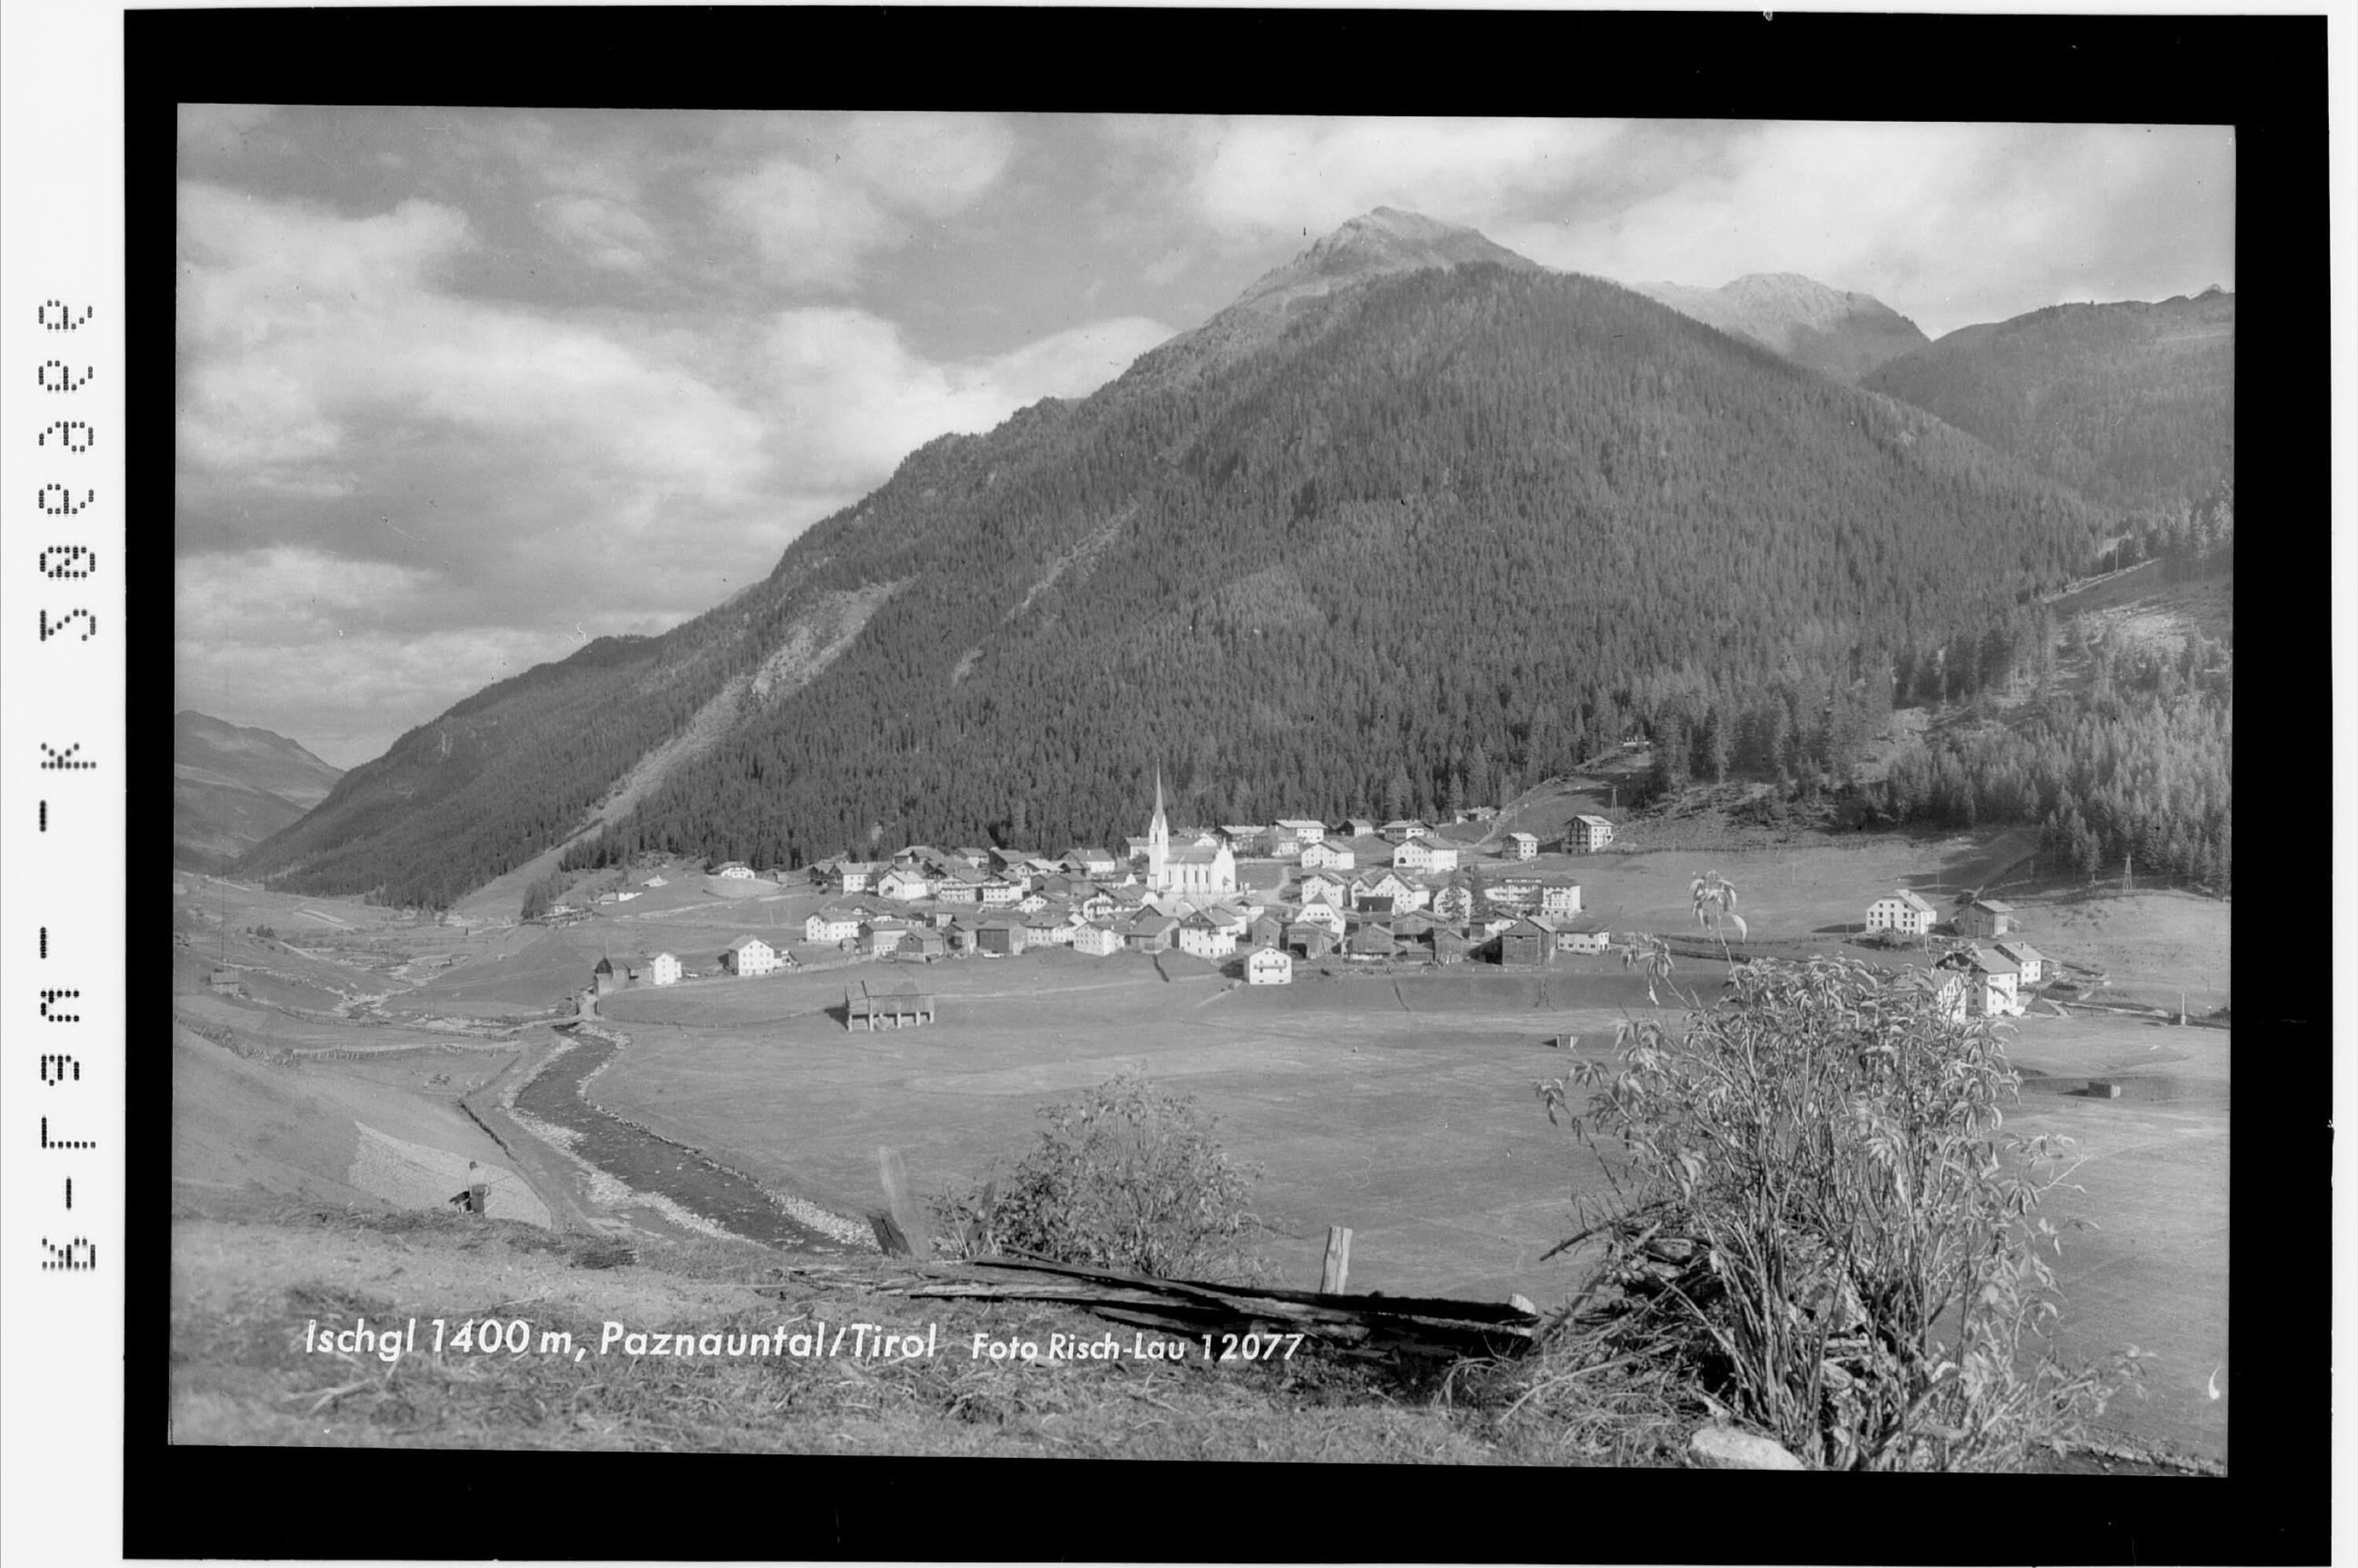 Ischgl 1400 m / Paznauntal / Tirol></div>


    <hr>
    <div class=